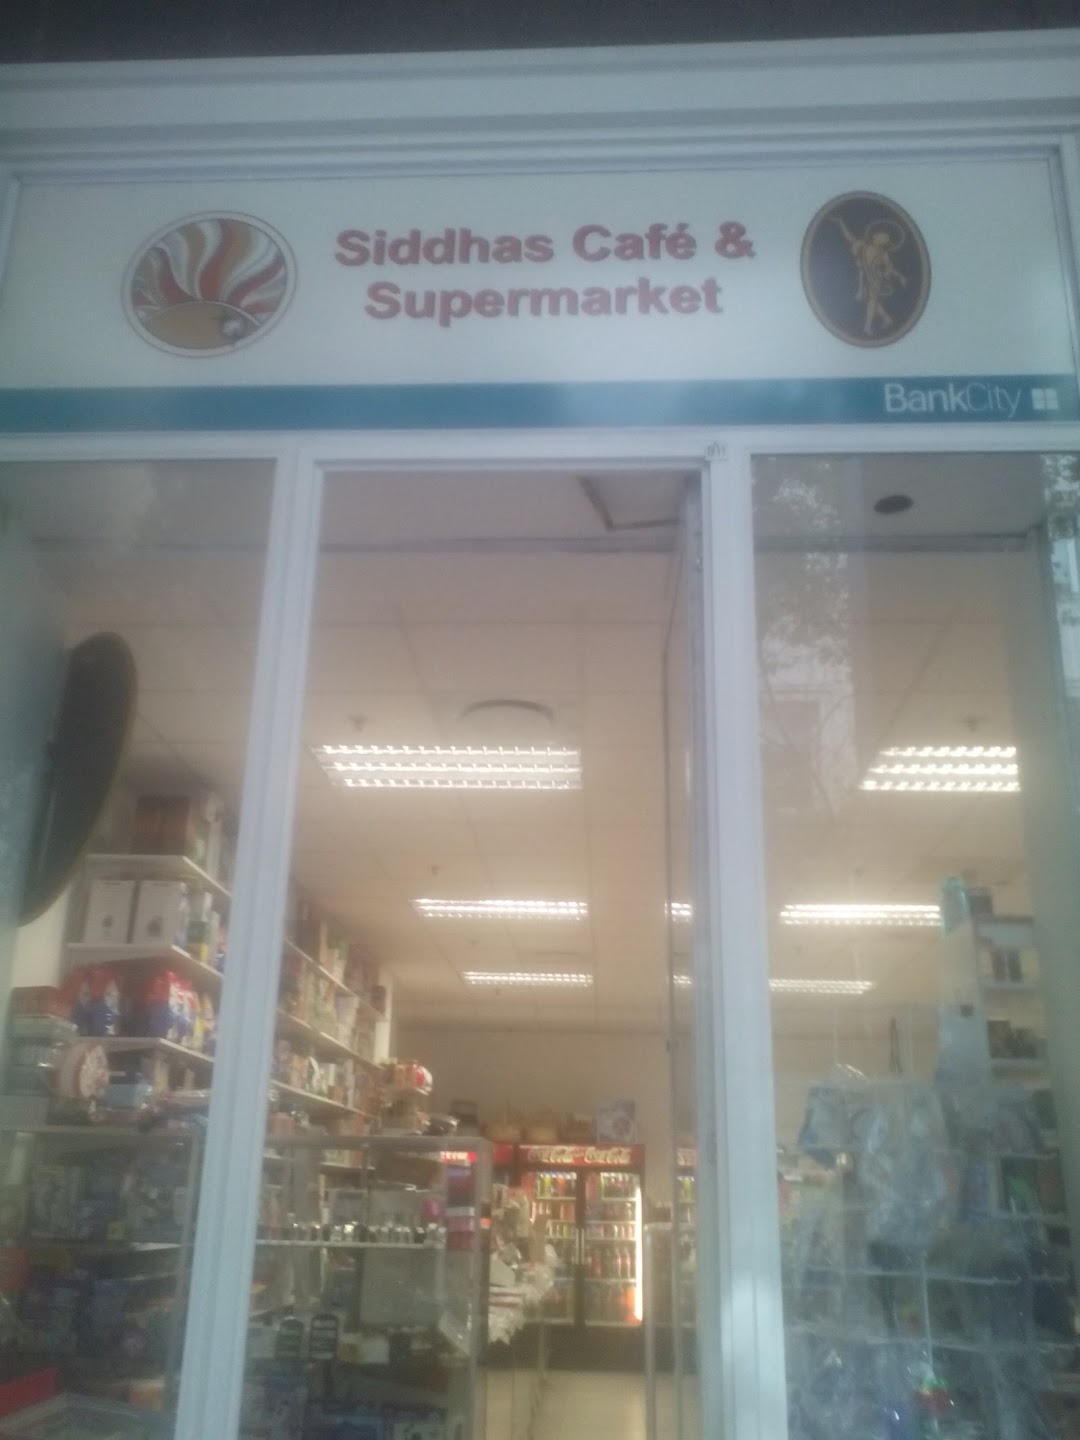 Siddhas Cafe & Supermarket